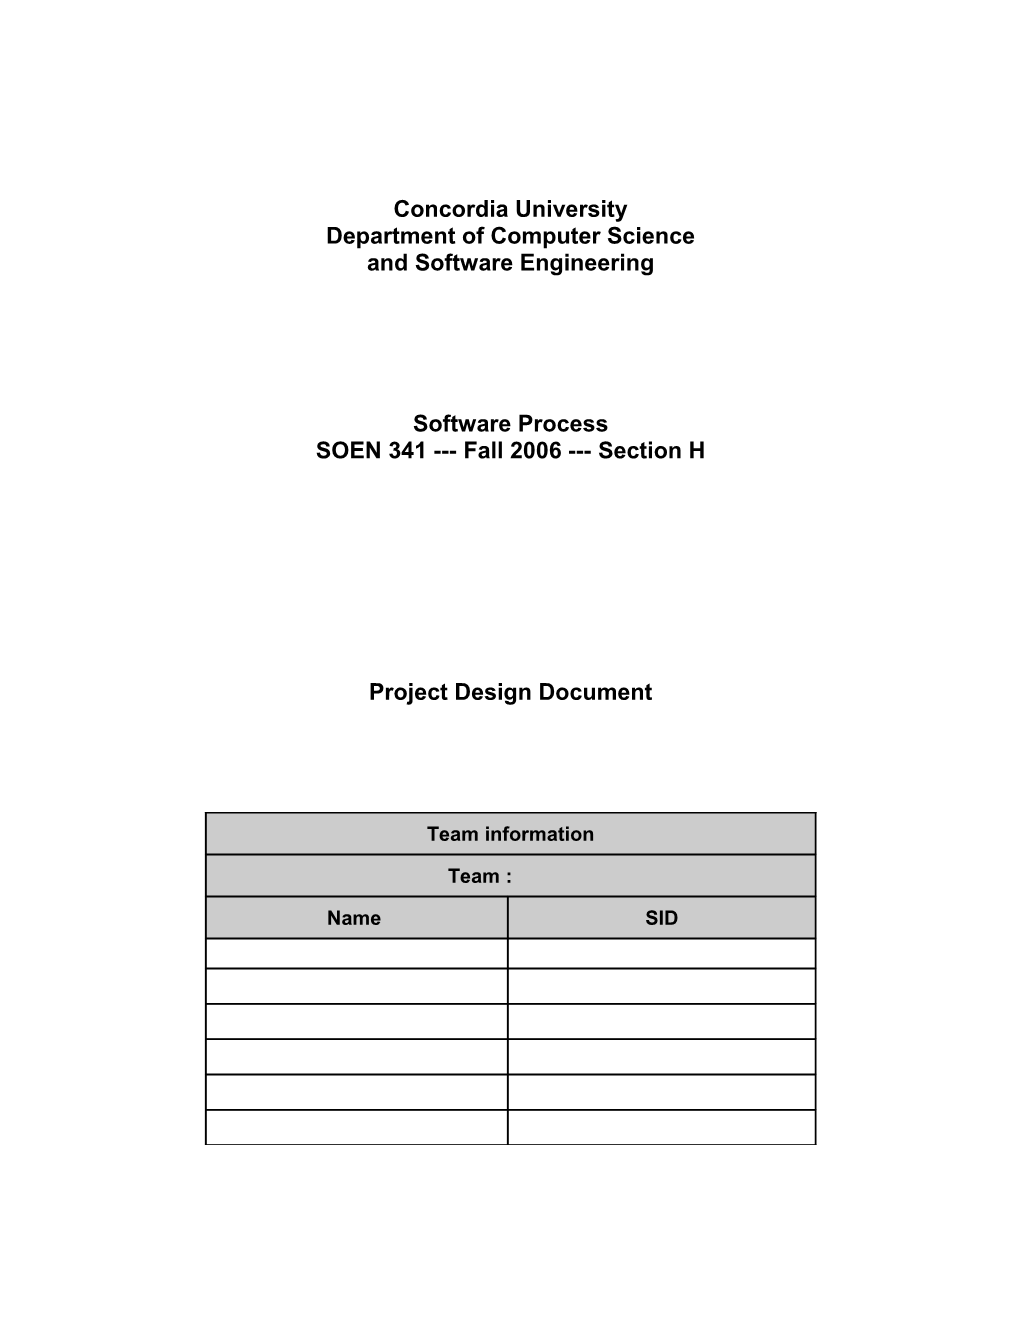 SOEN 341 Fall 2006Project Design Document